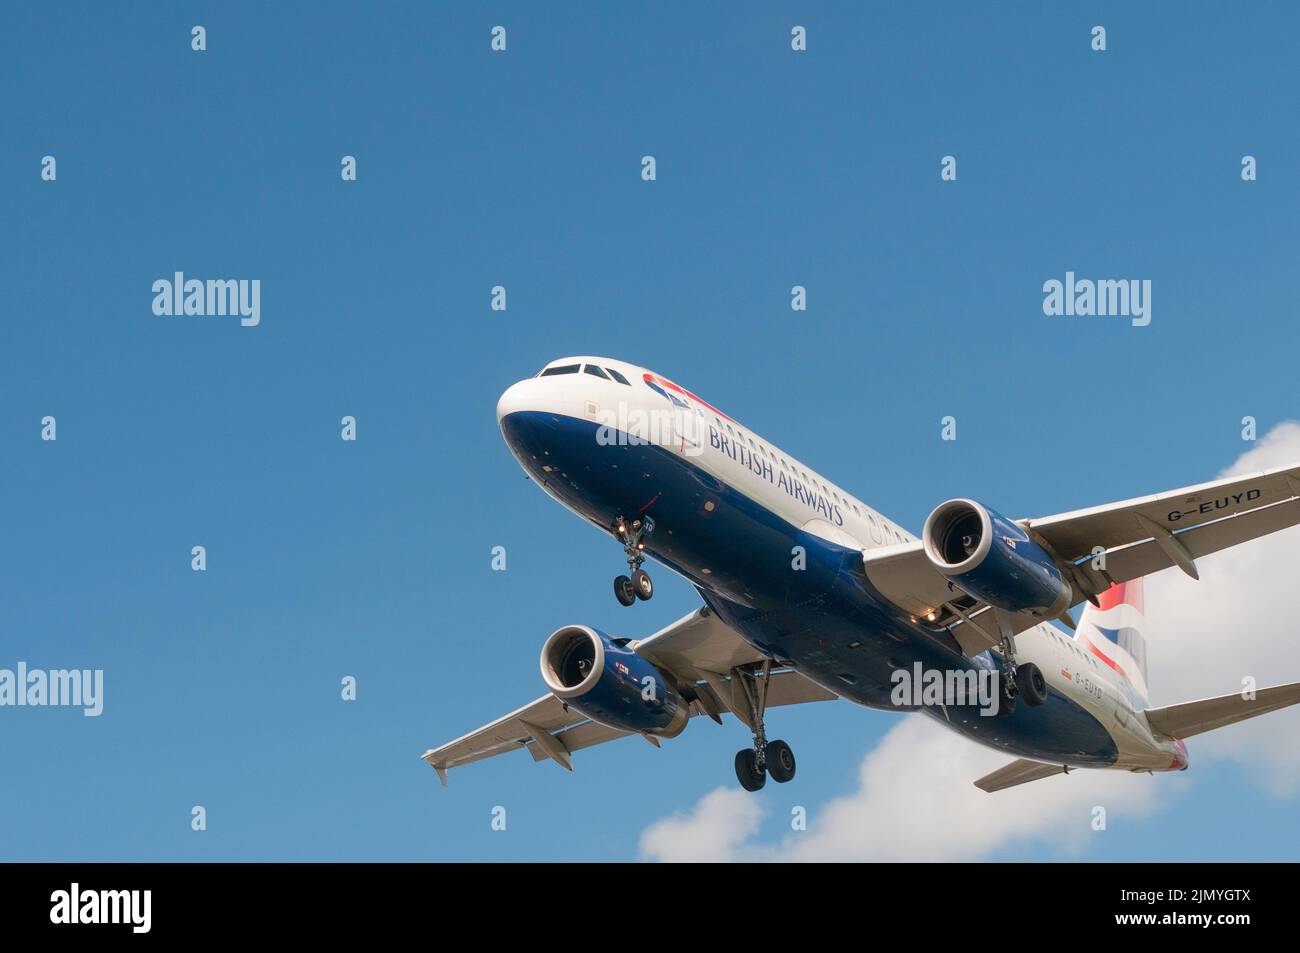 London, UK - August 08, 2022 - British Airways airplane close-up shot while landing at Heathrow airport Stock Photo